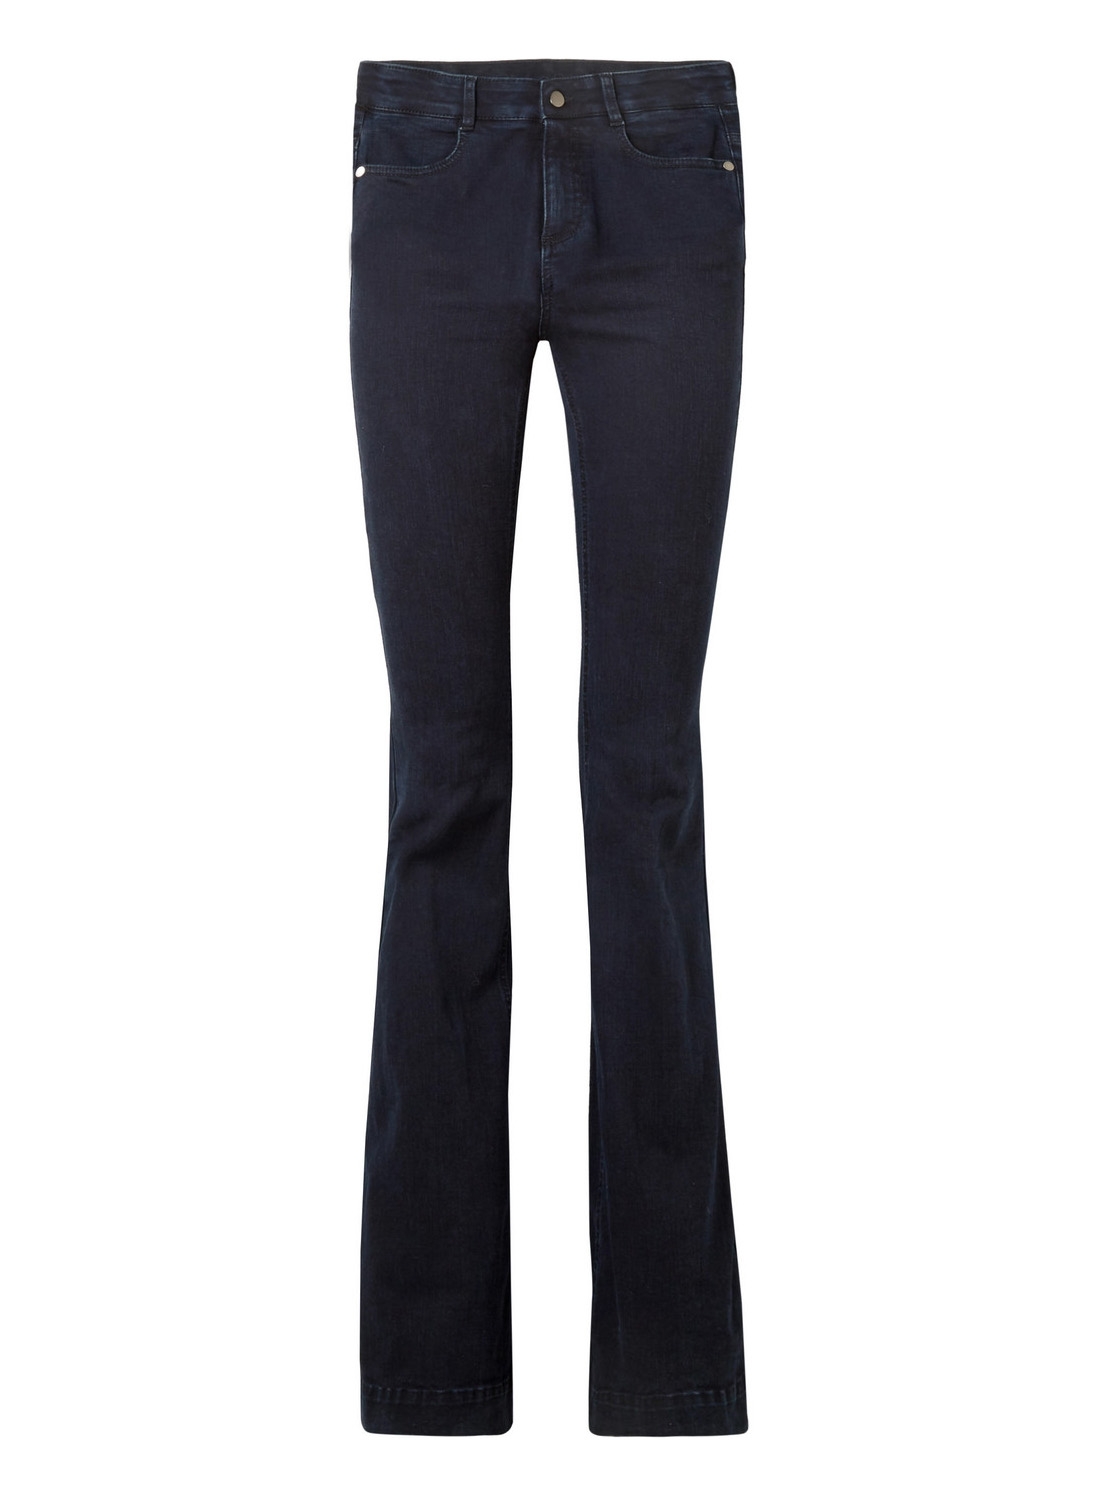 https://louiseparis.fr/66806/stella-mccartney-dark-blue-the-70s-high-rise-flared-jeans-size-26.jpg